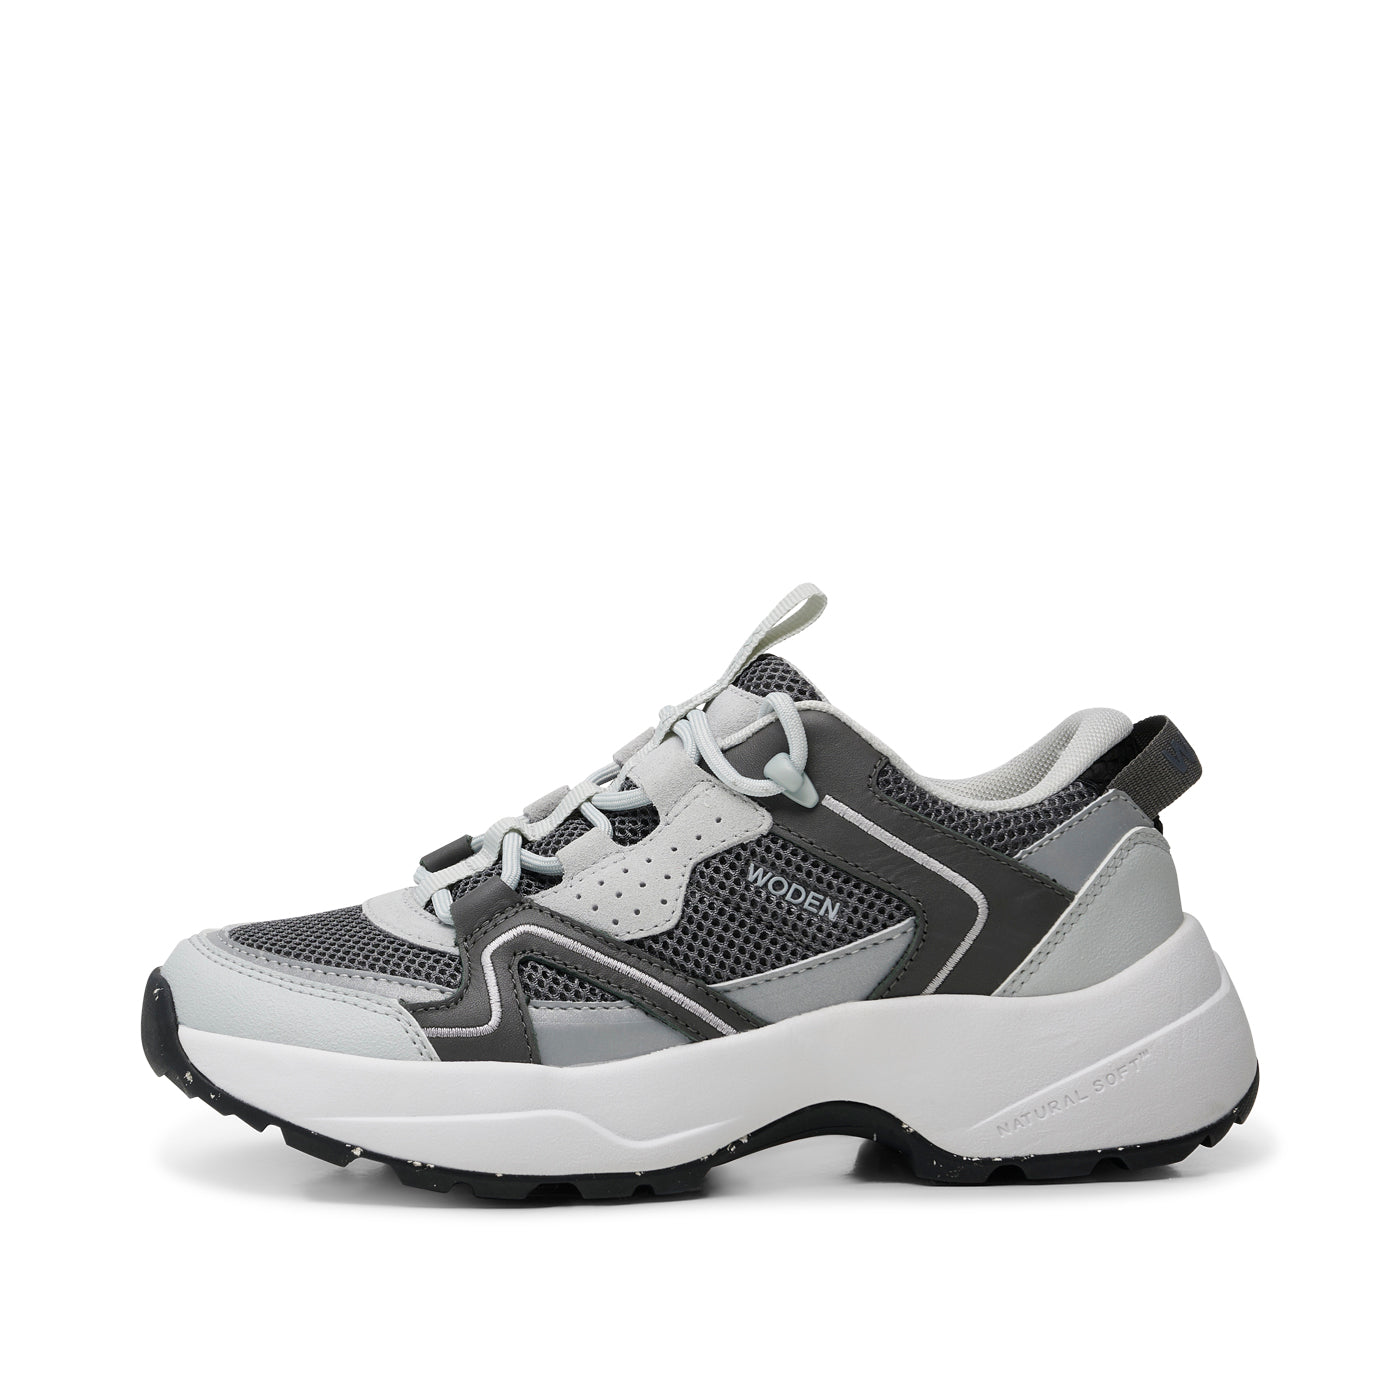 WODEN Sif Reflective Sneakers 051 Dark Grey